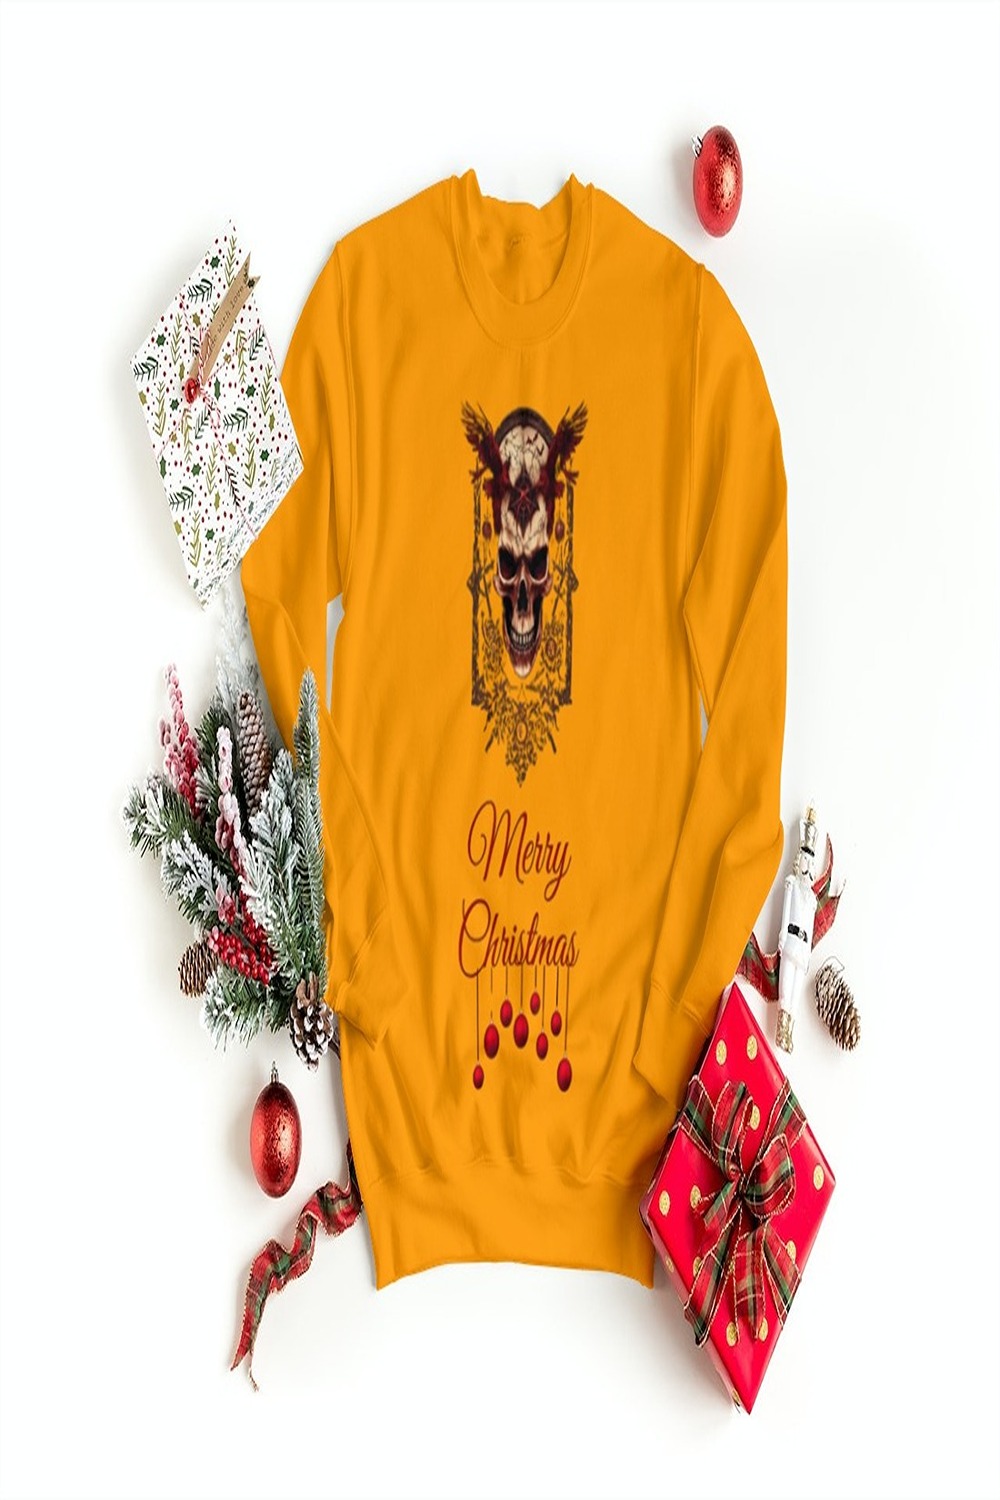 Merry Christmas - Skulls T-shirt Design Template pinterest preview image.